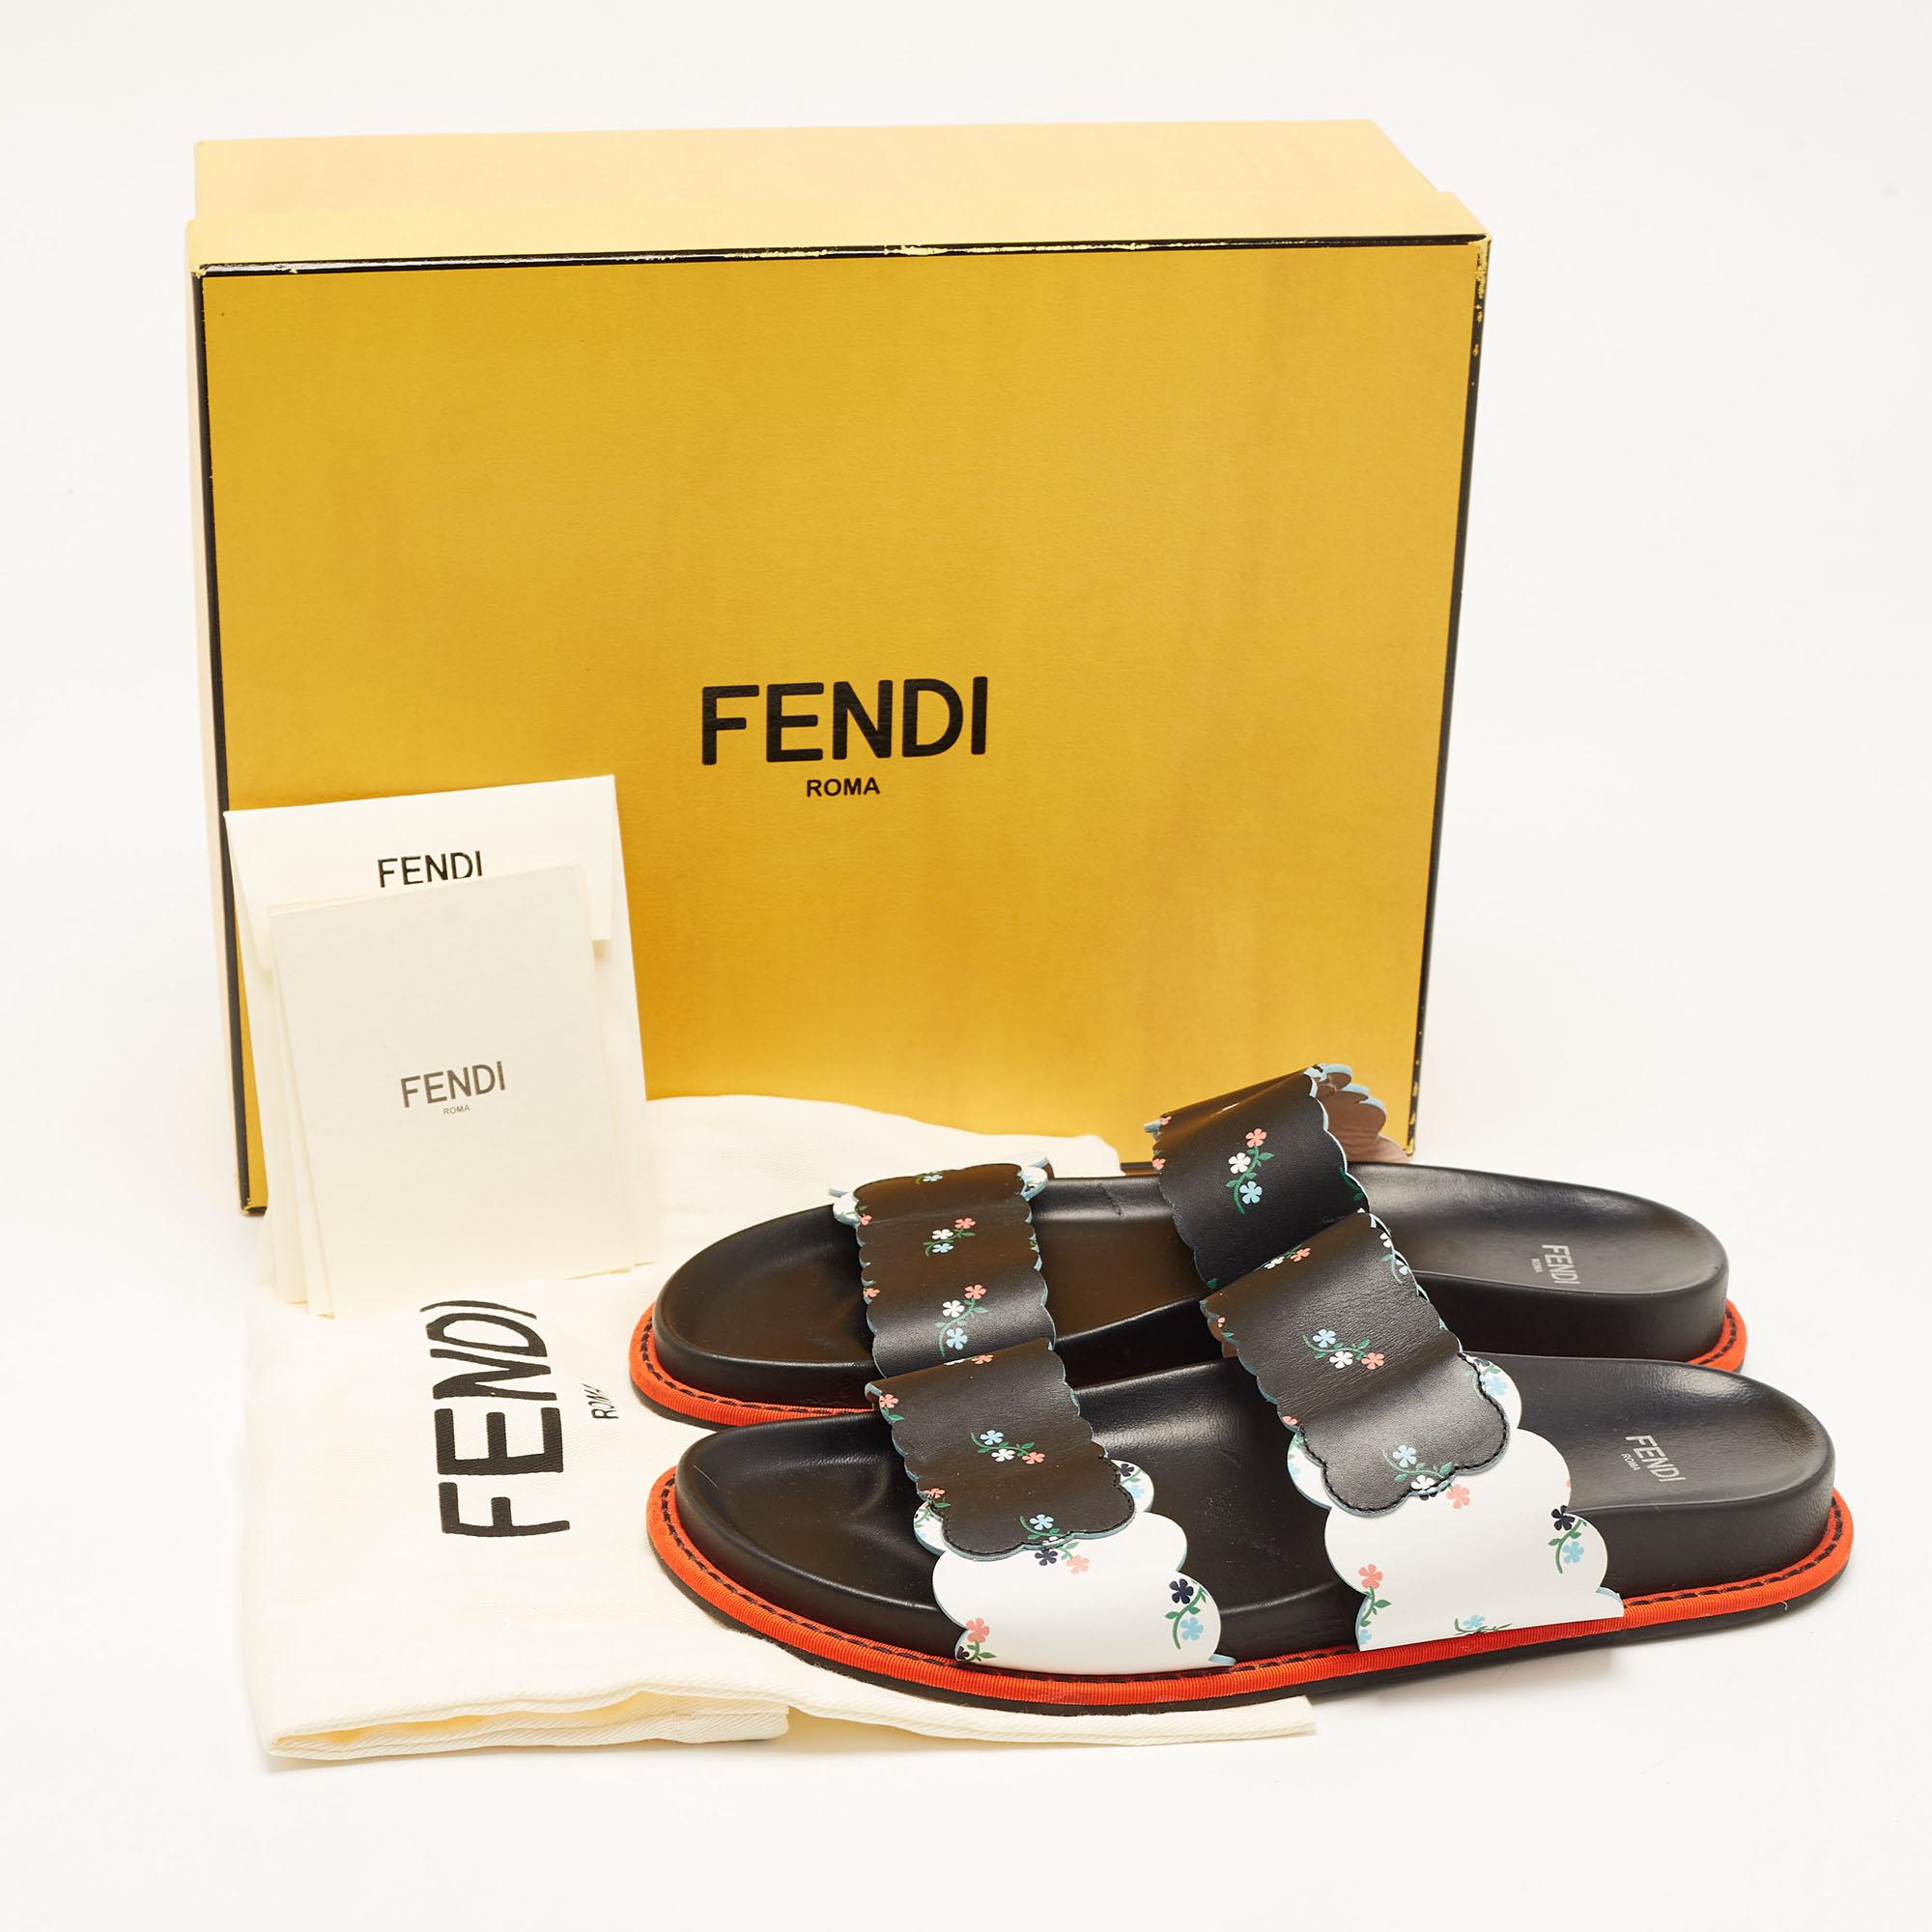 Fendi Multicolor Floral Print Leather Strap Slide Sandals Size 38 For Sale 2